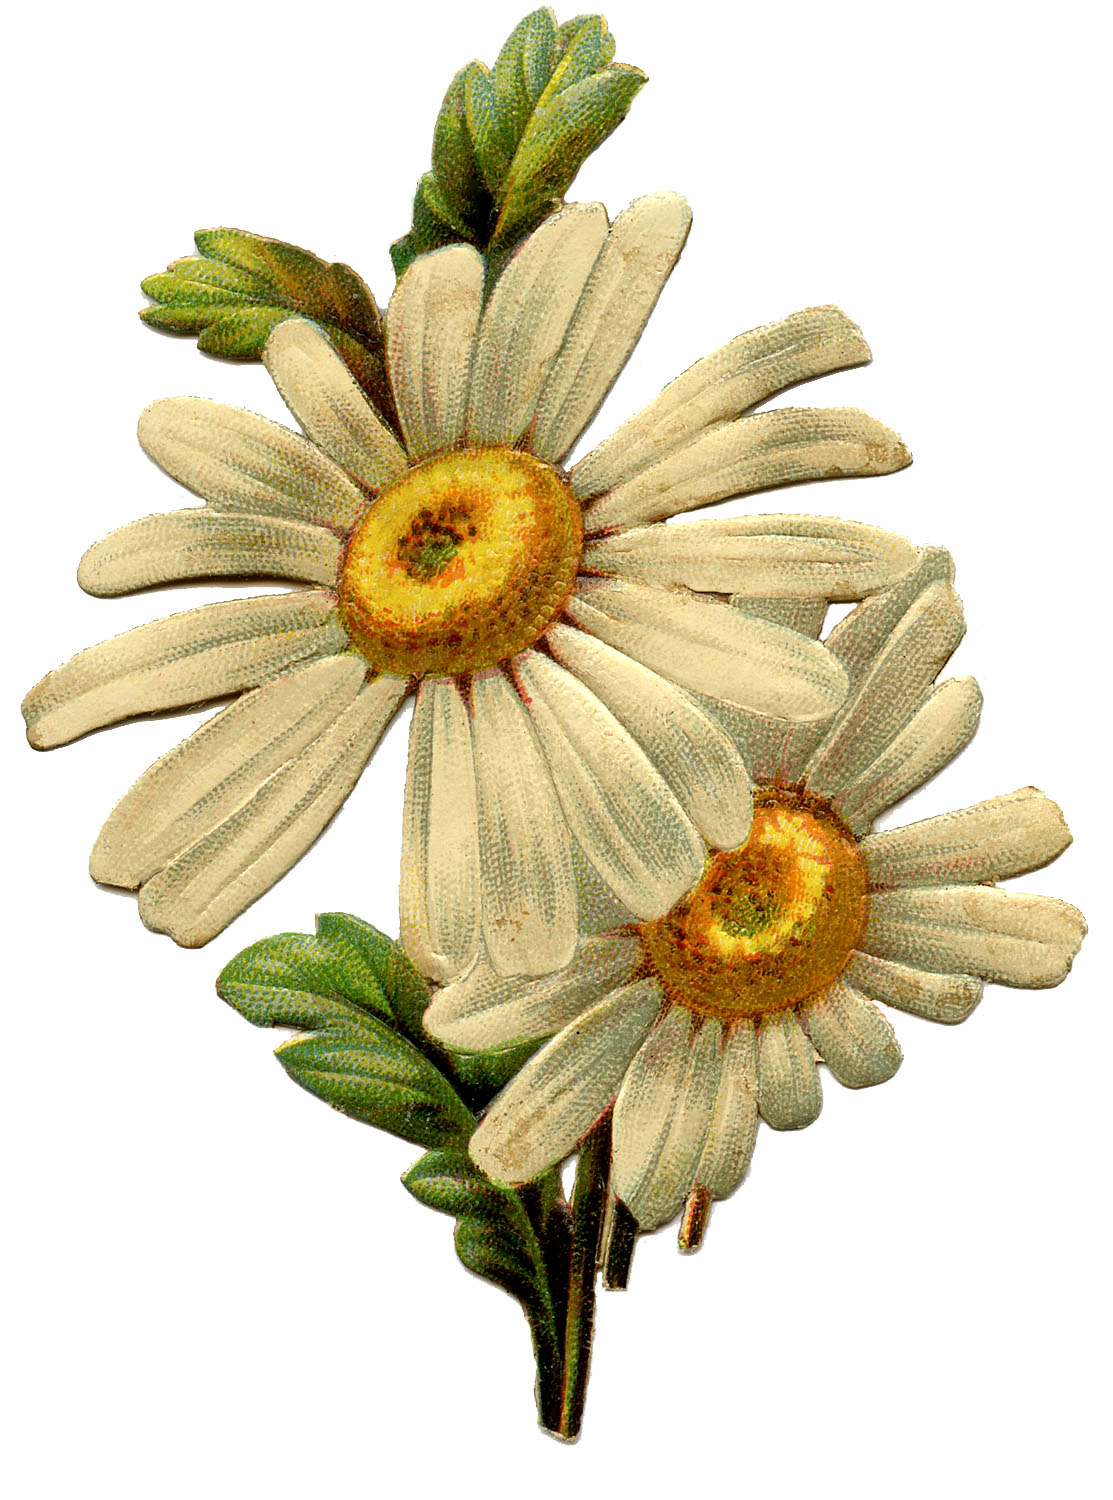 daisies clipart january